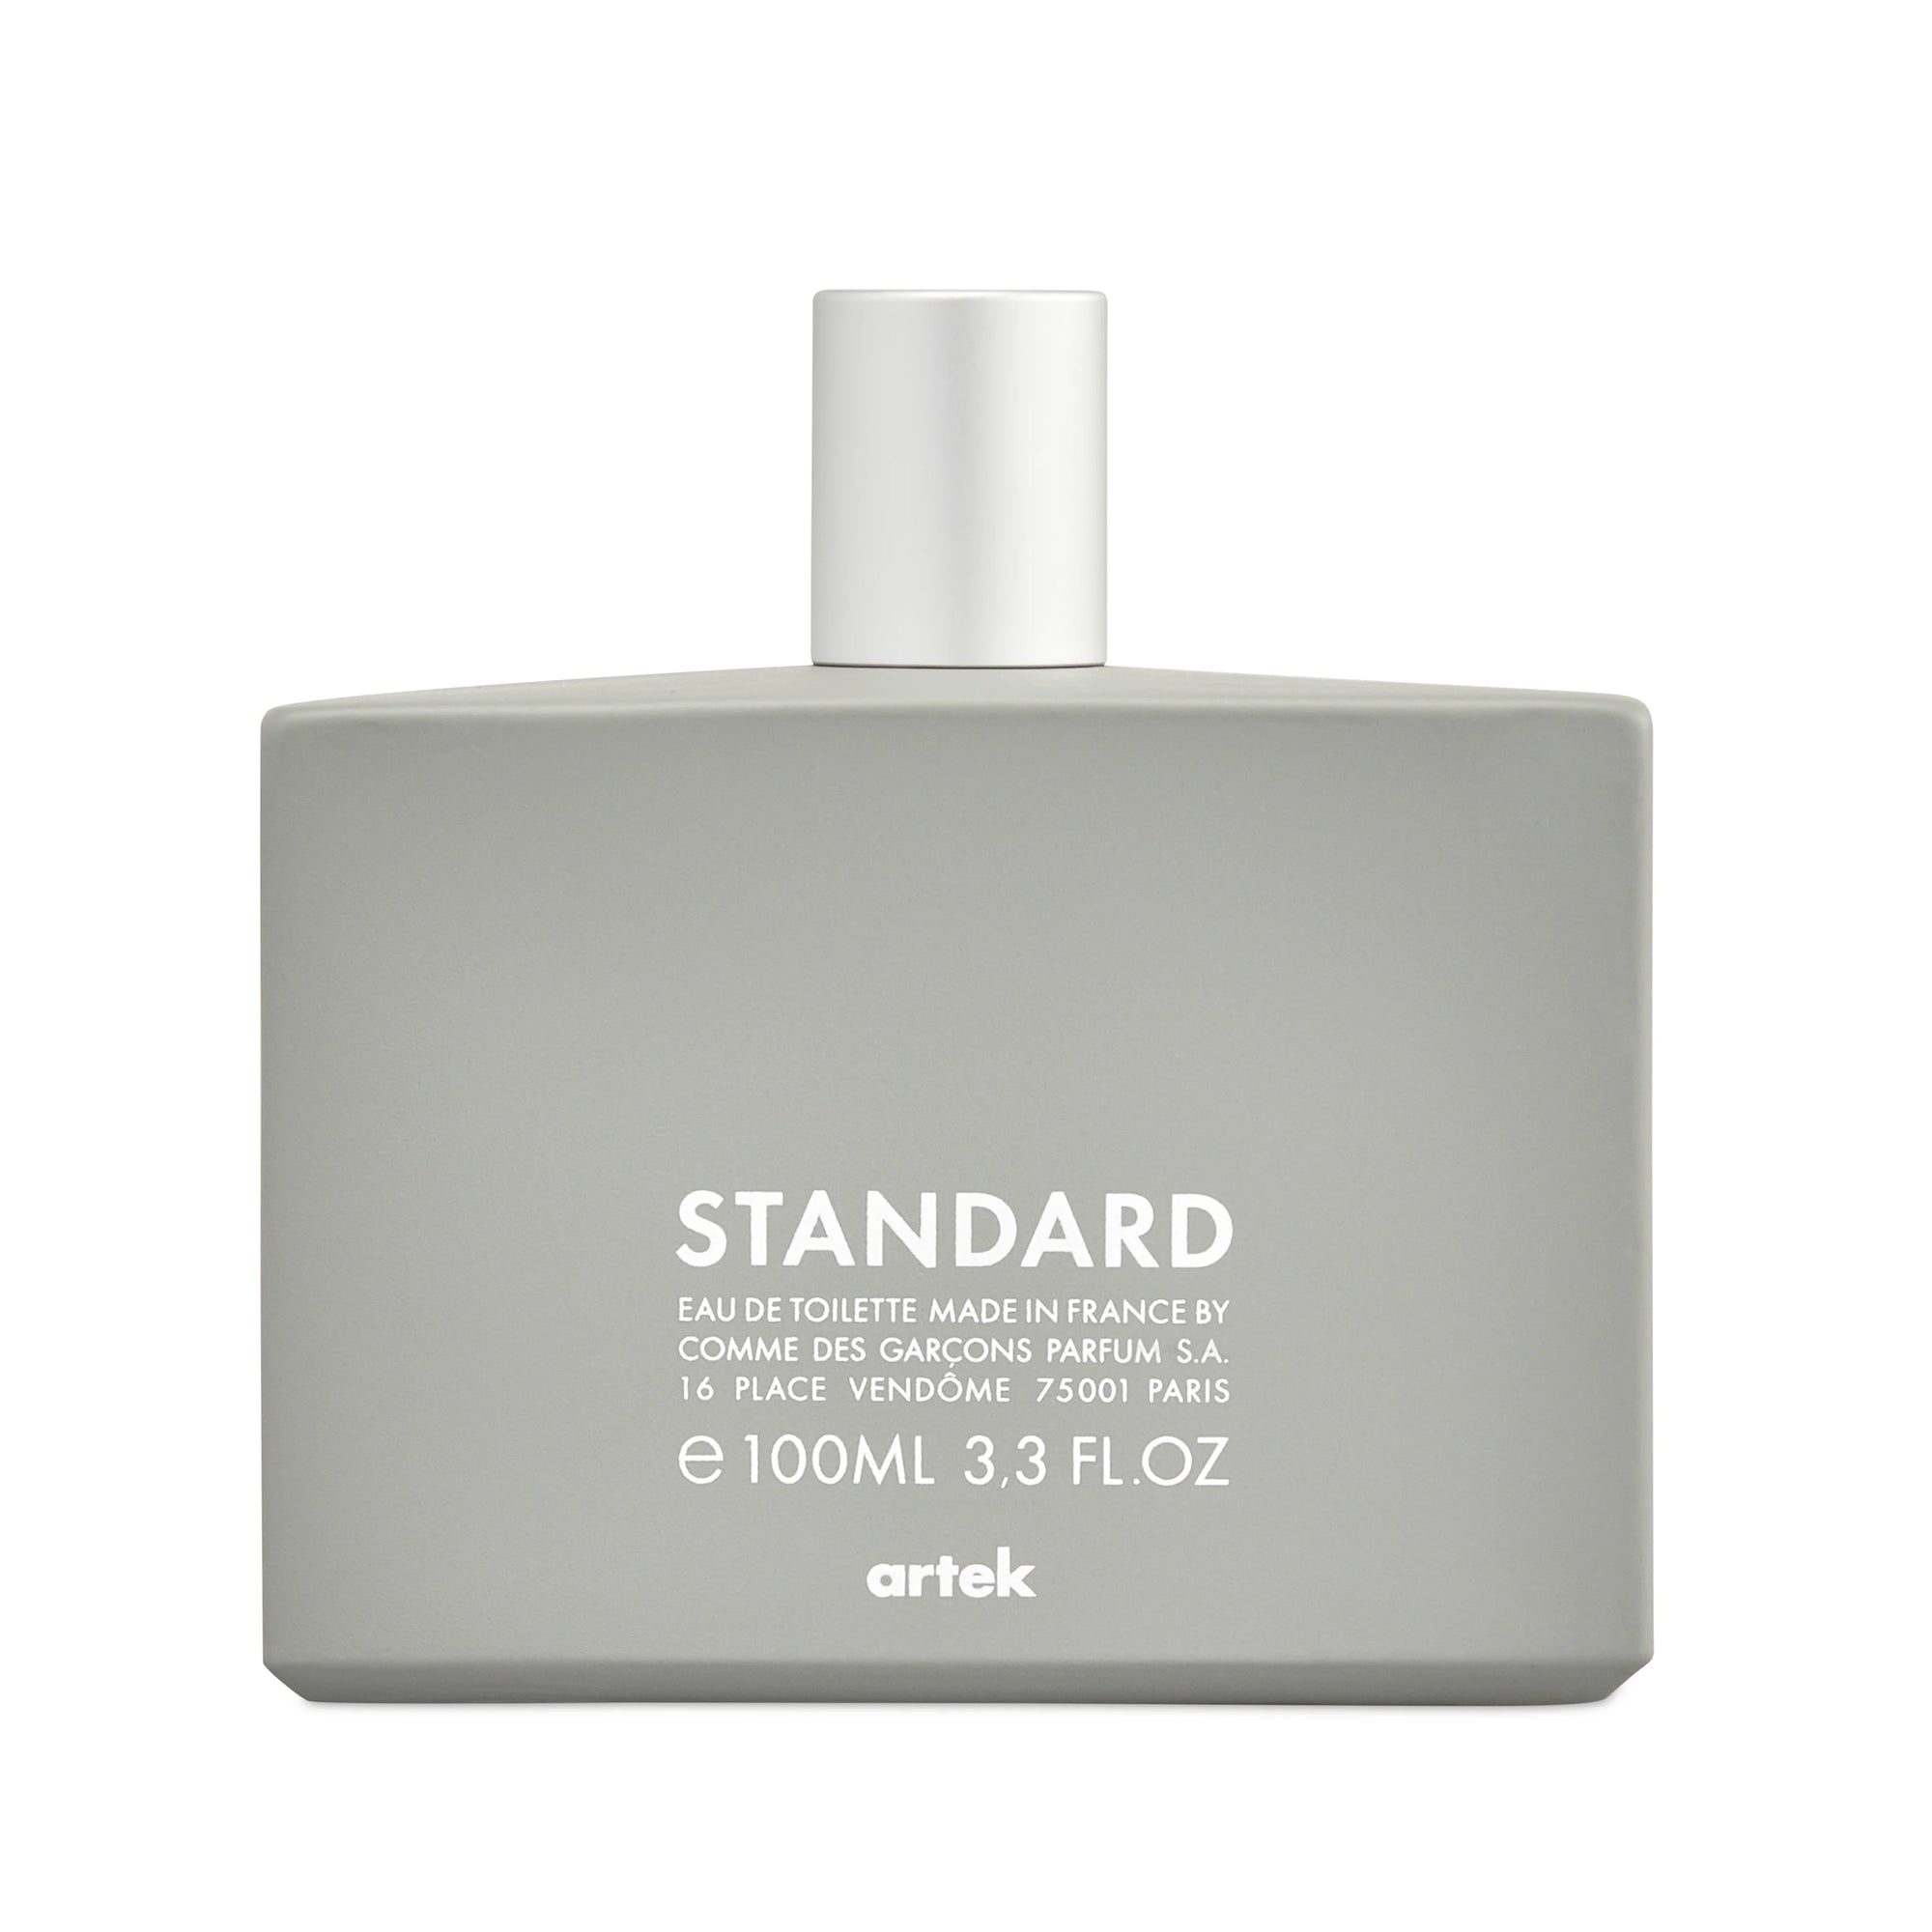 CDG Parfum - artek Standard Eau de Toilette - (100ml natural spray) view 1